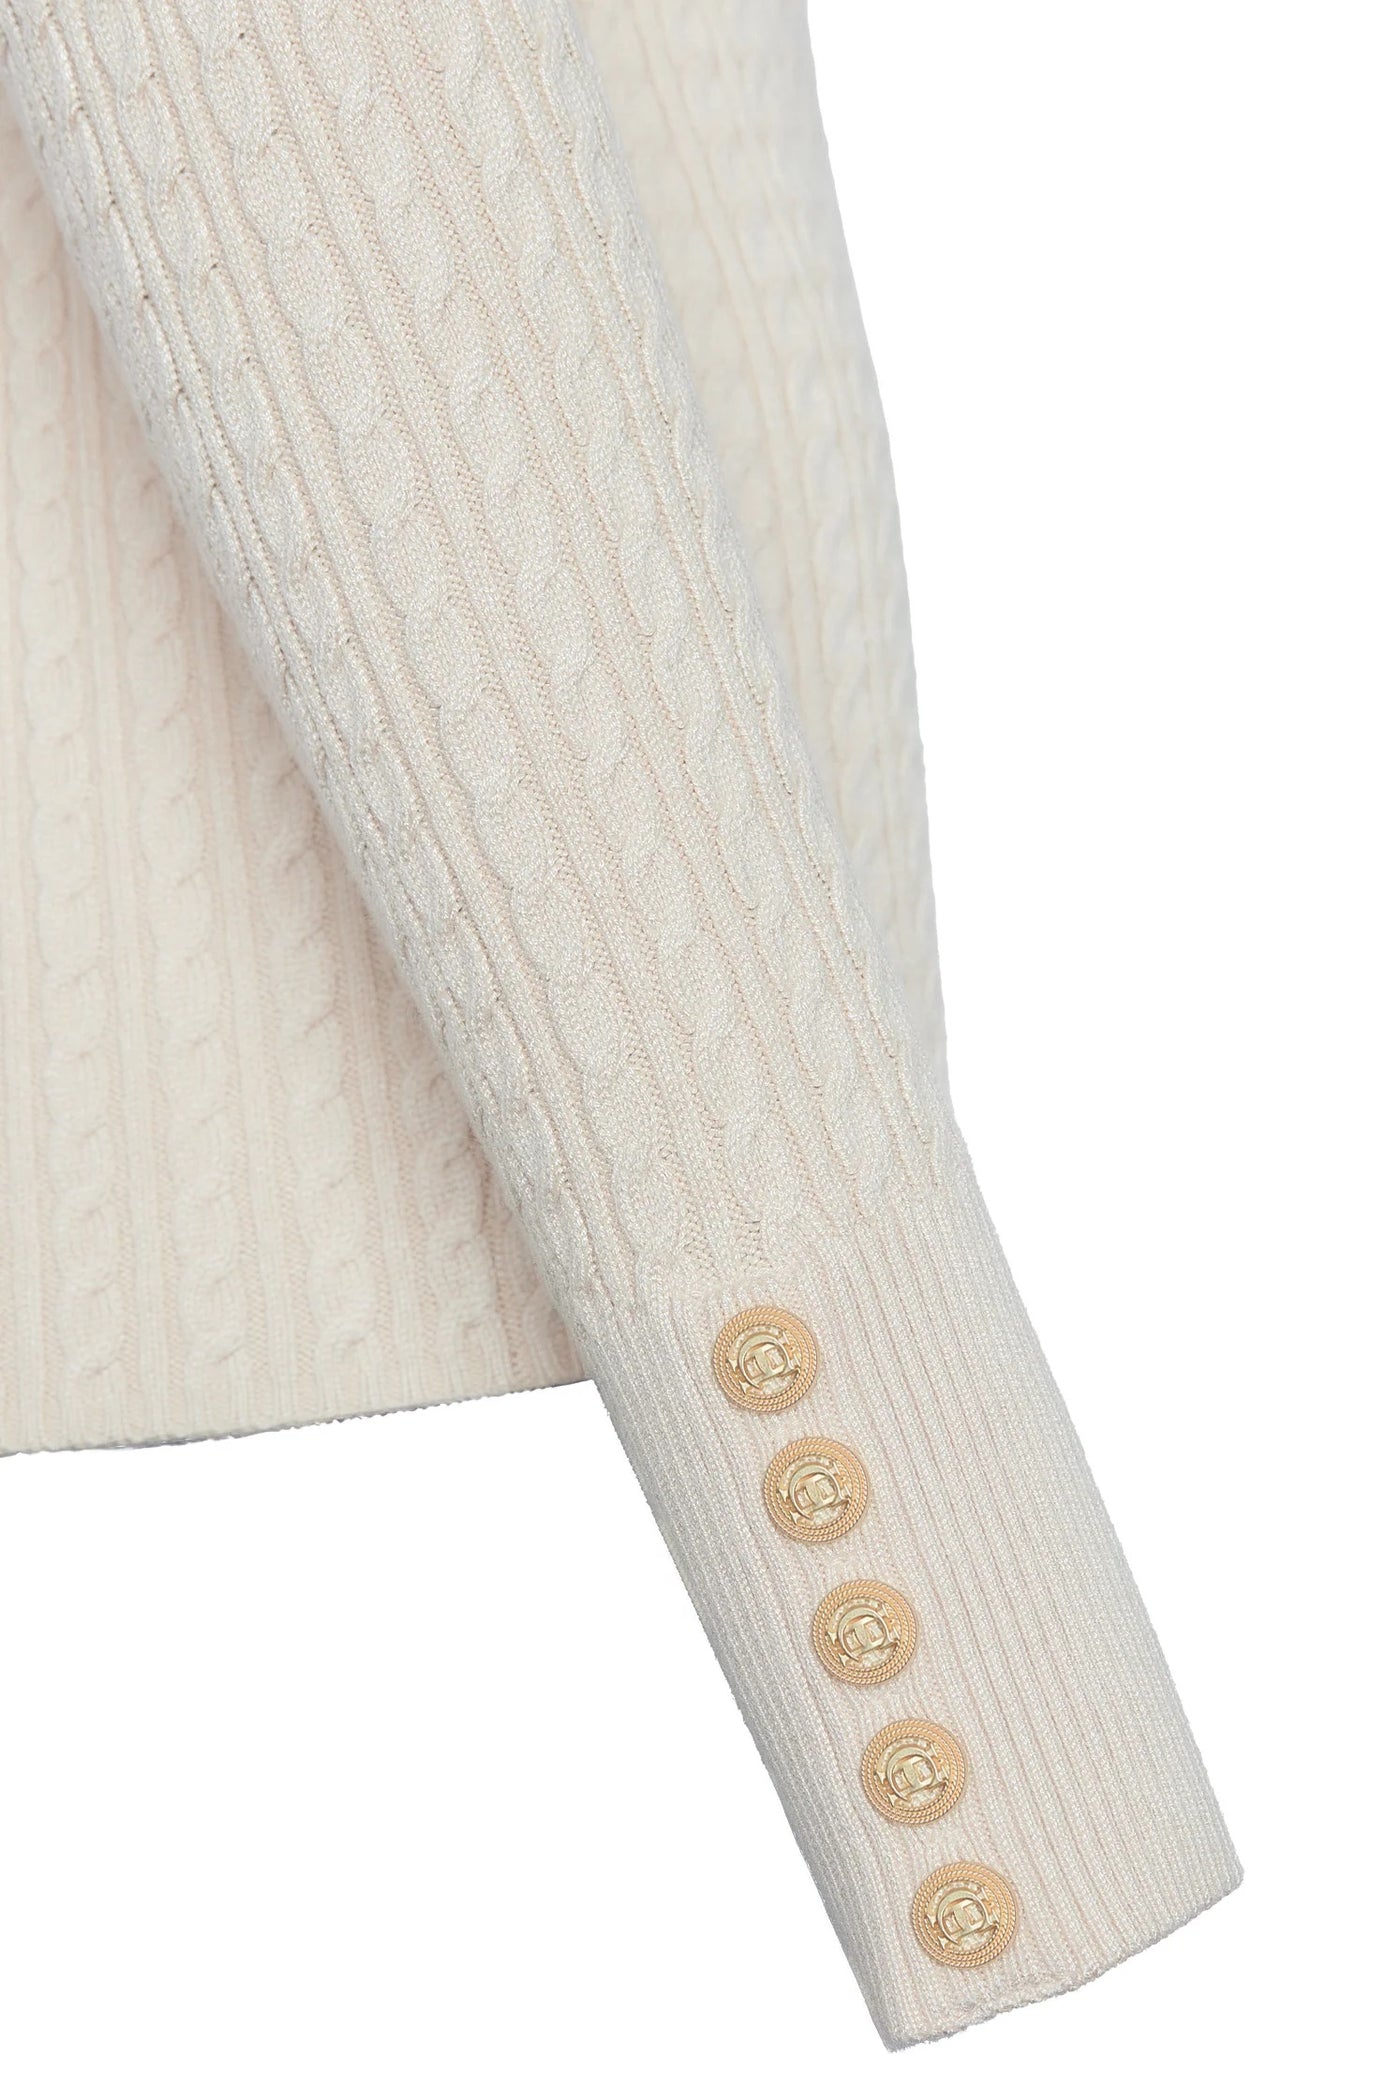 Holland Cooper Ava Half Zip Knit Ladies Knitwear in Almond Detail